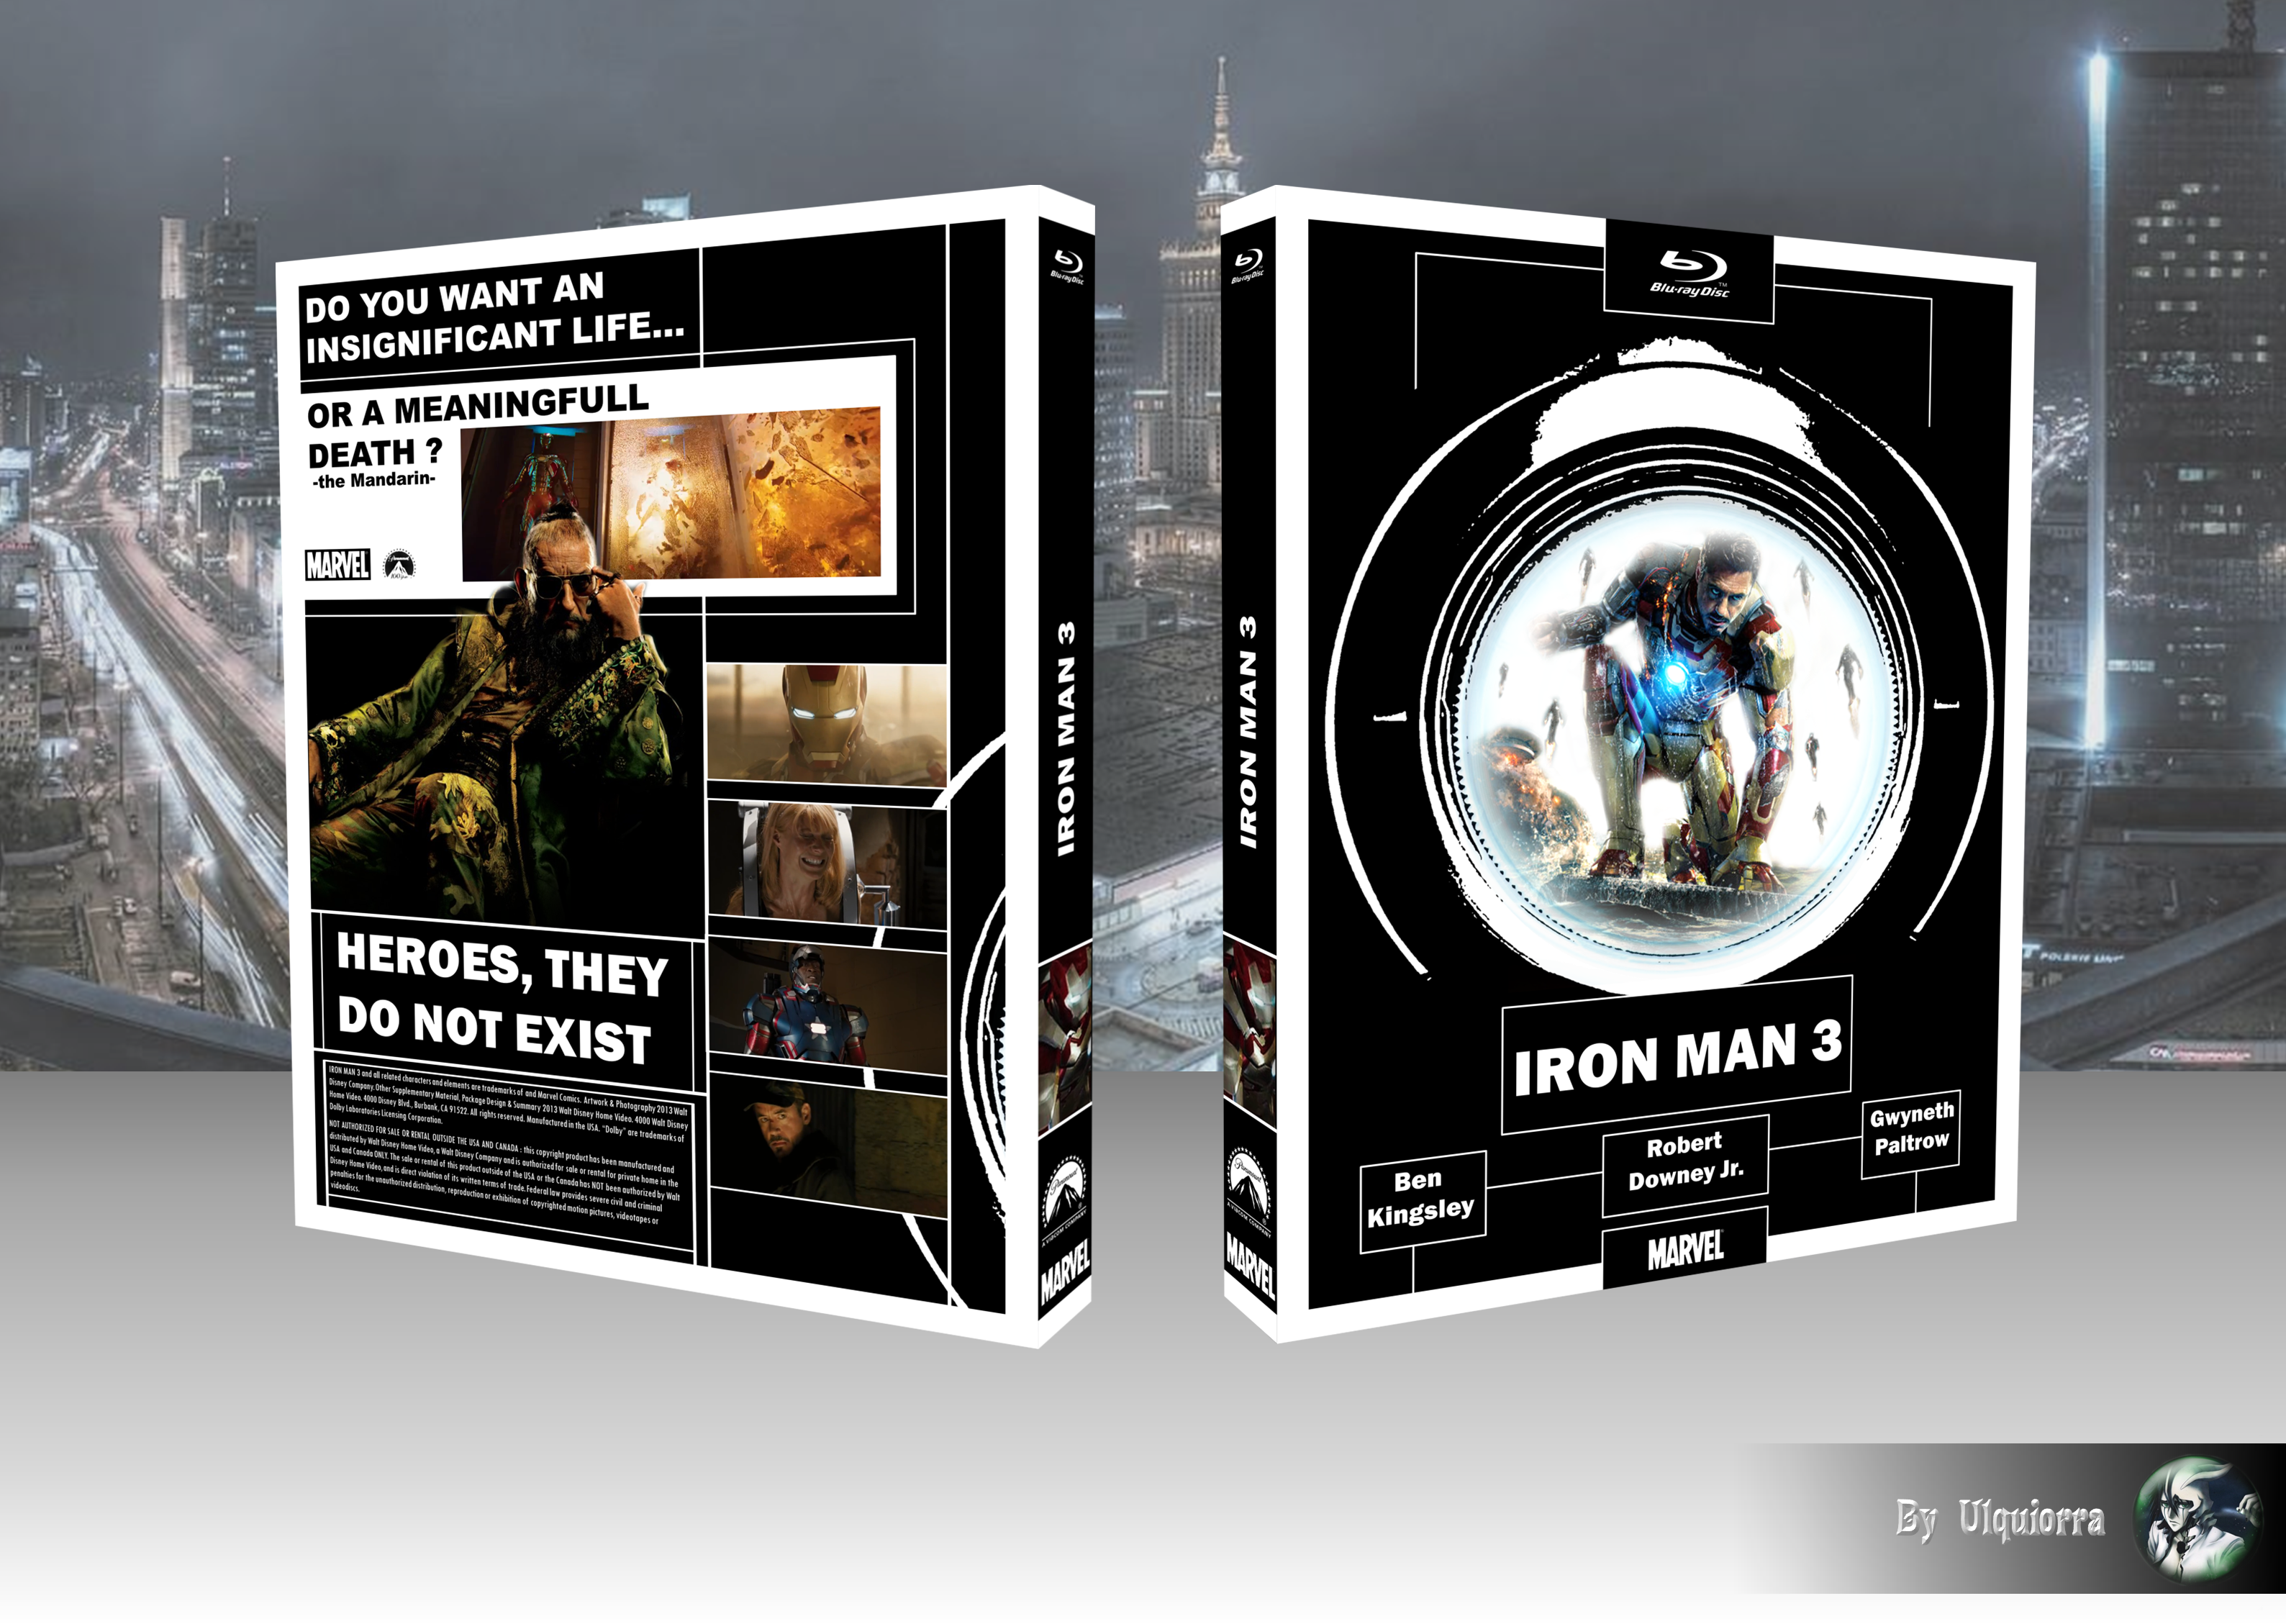 Iron Man 3 box cover